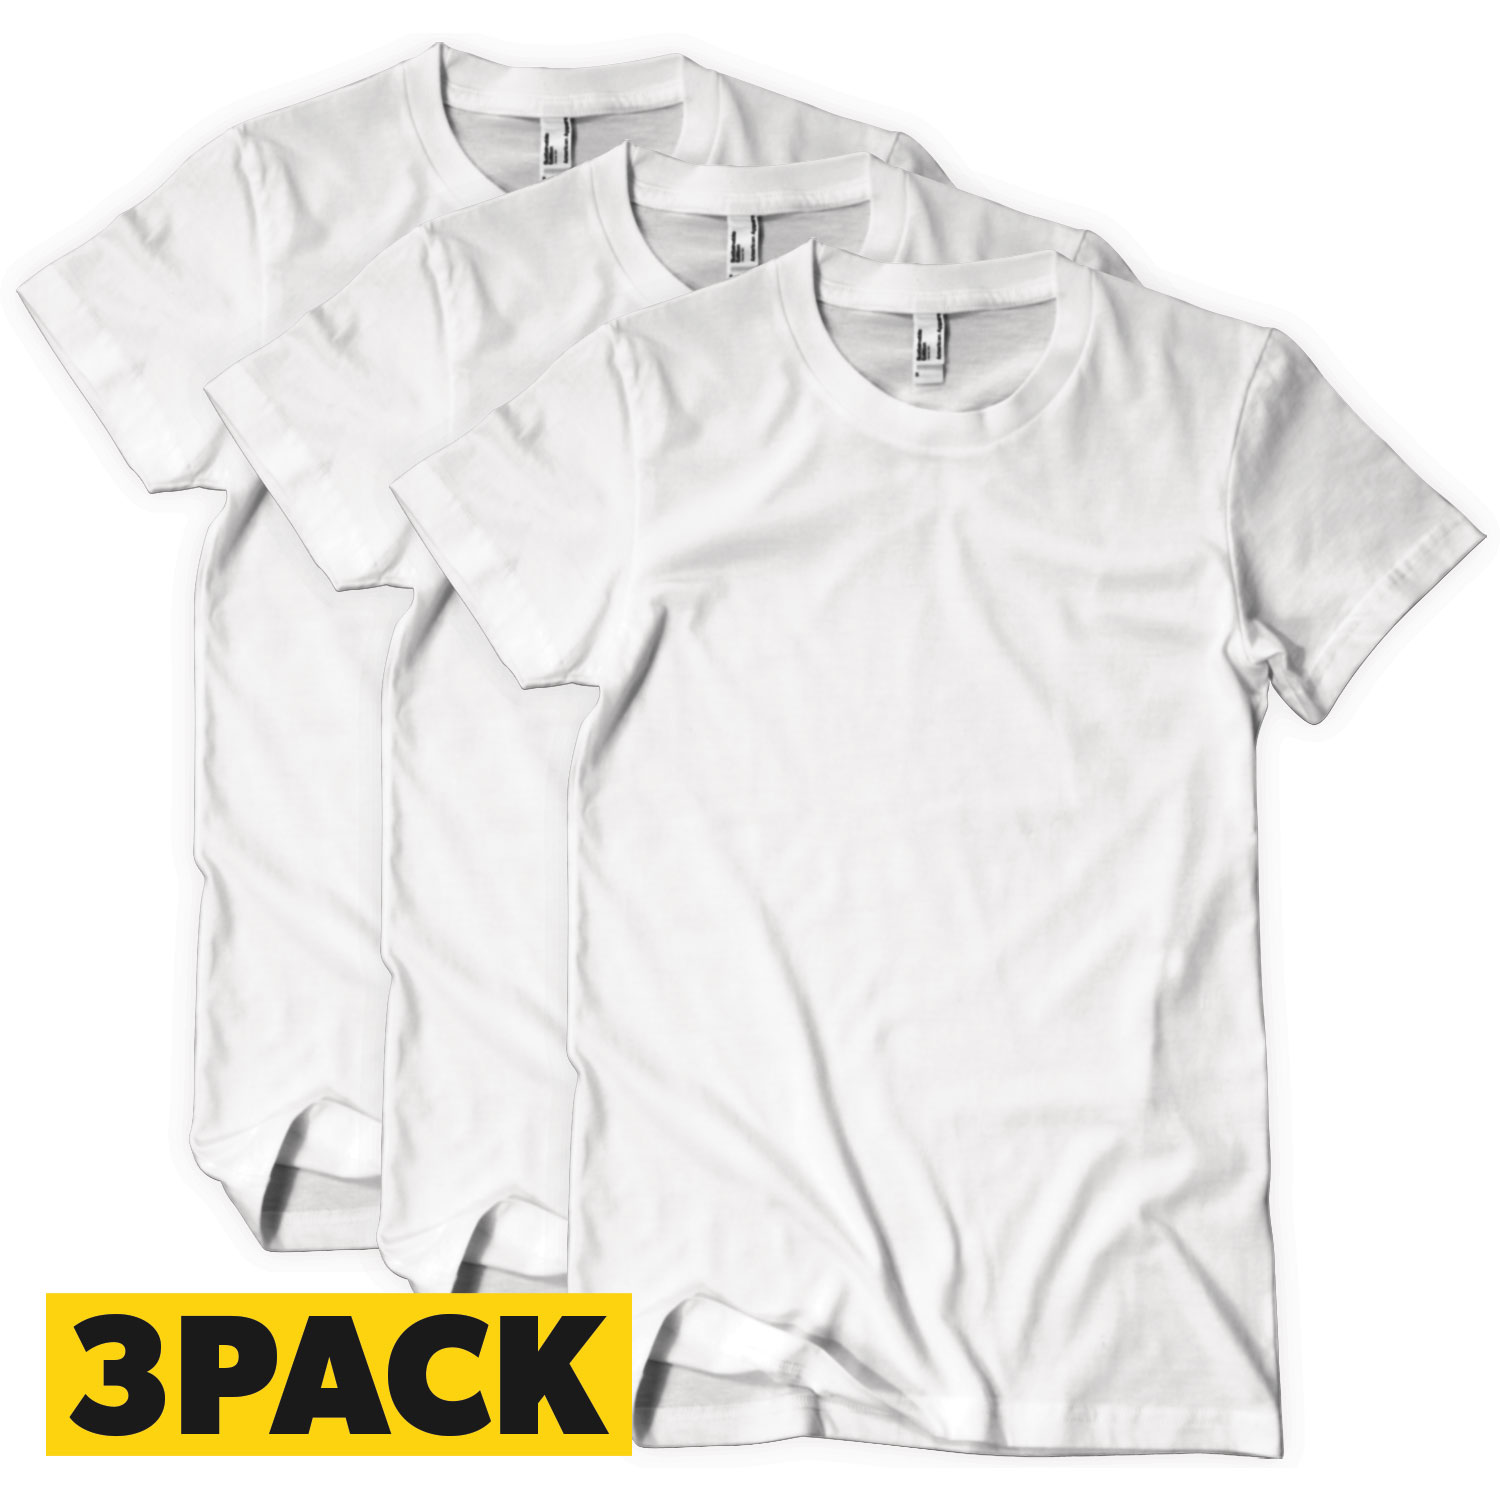 T-Shirts Big Pack White - 3 pack